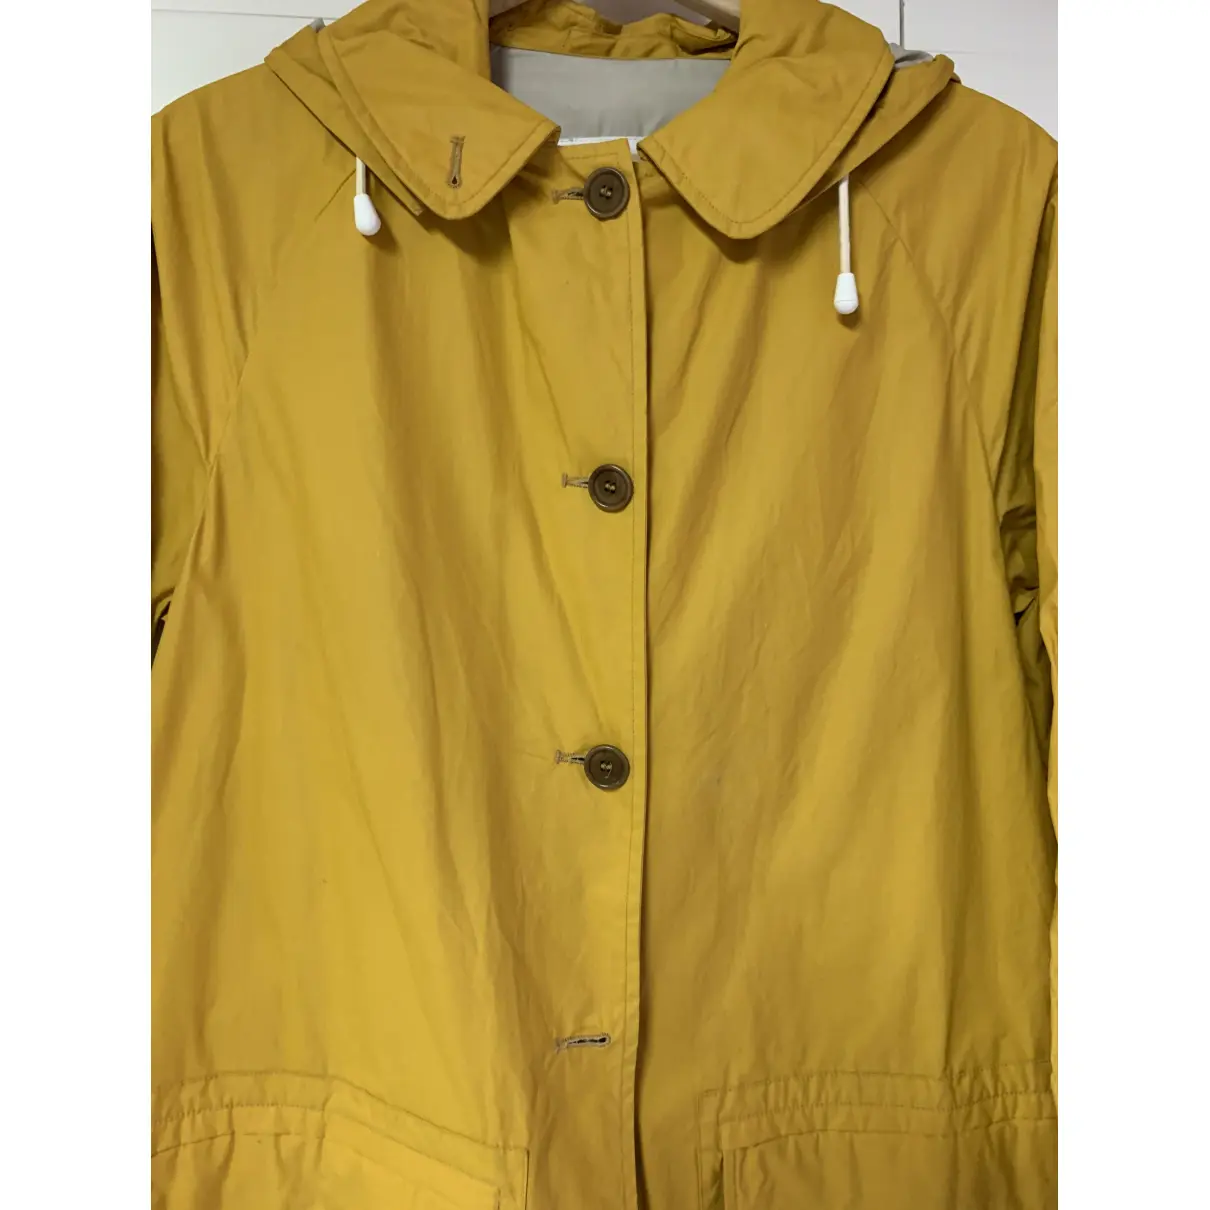 Buy Margaret Howell Trench coat online